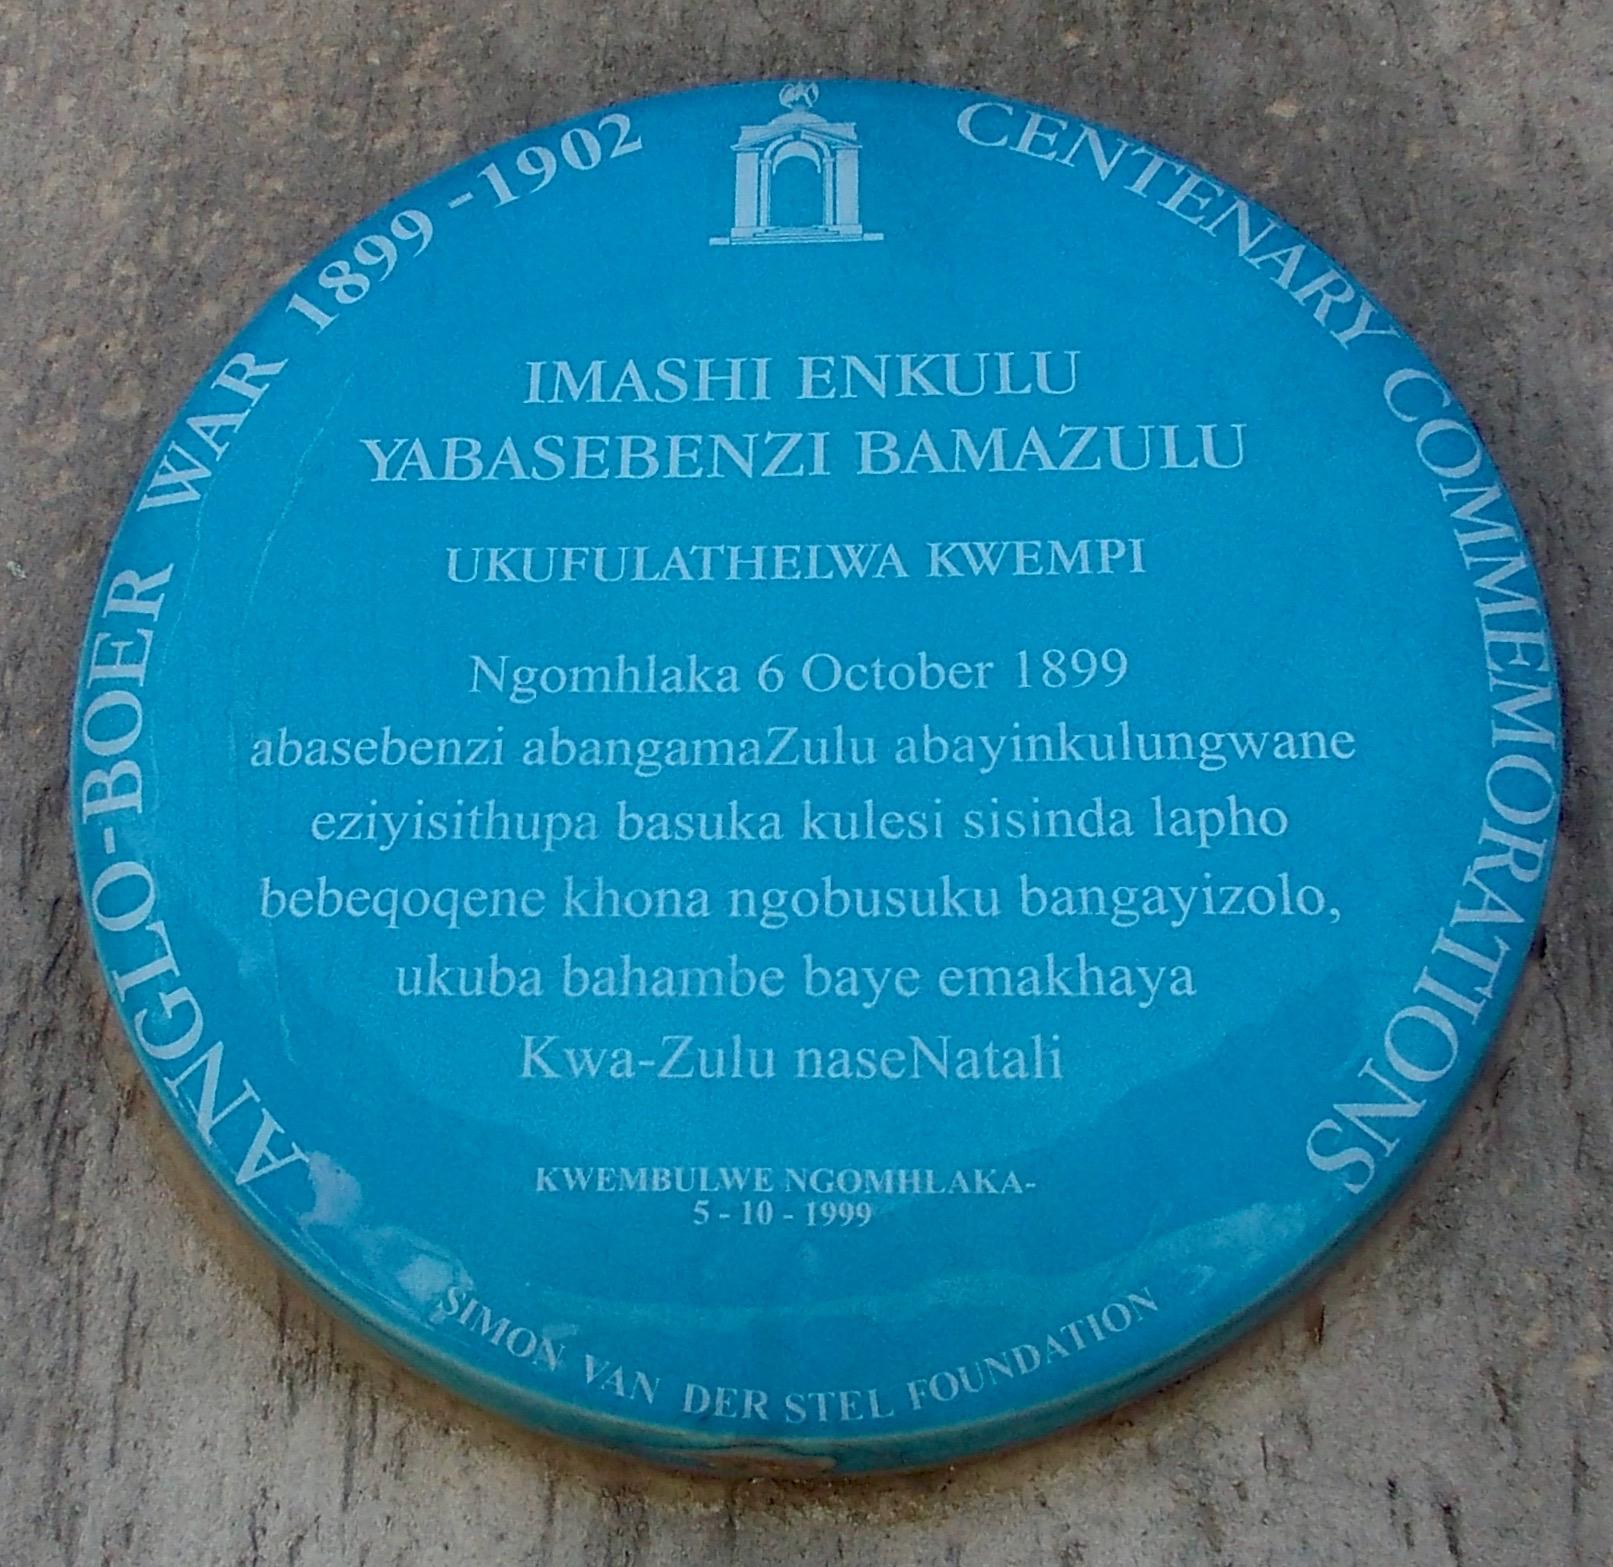 Imashi Enkulu Yabasebenzi BamaZulu - Blue Plaque - Heritage Portal - 2012